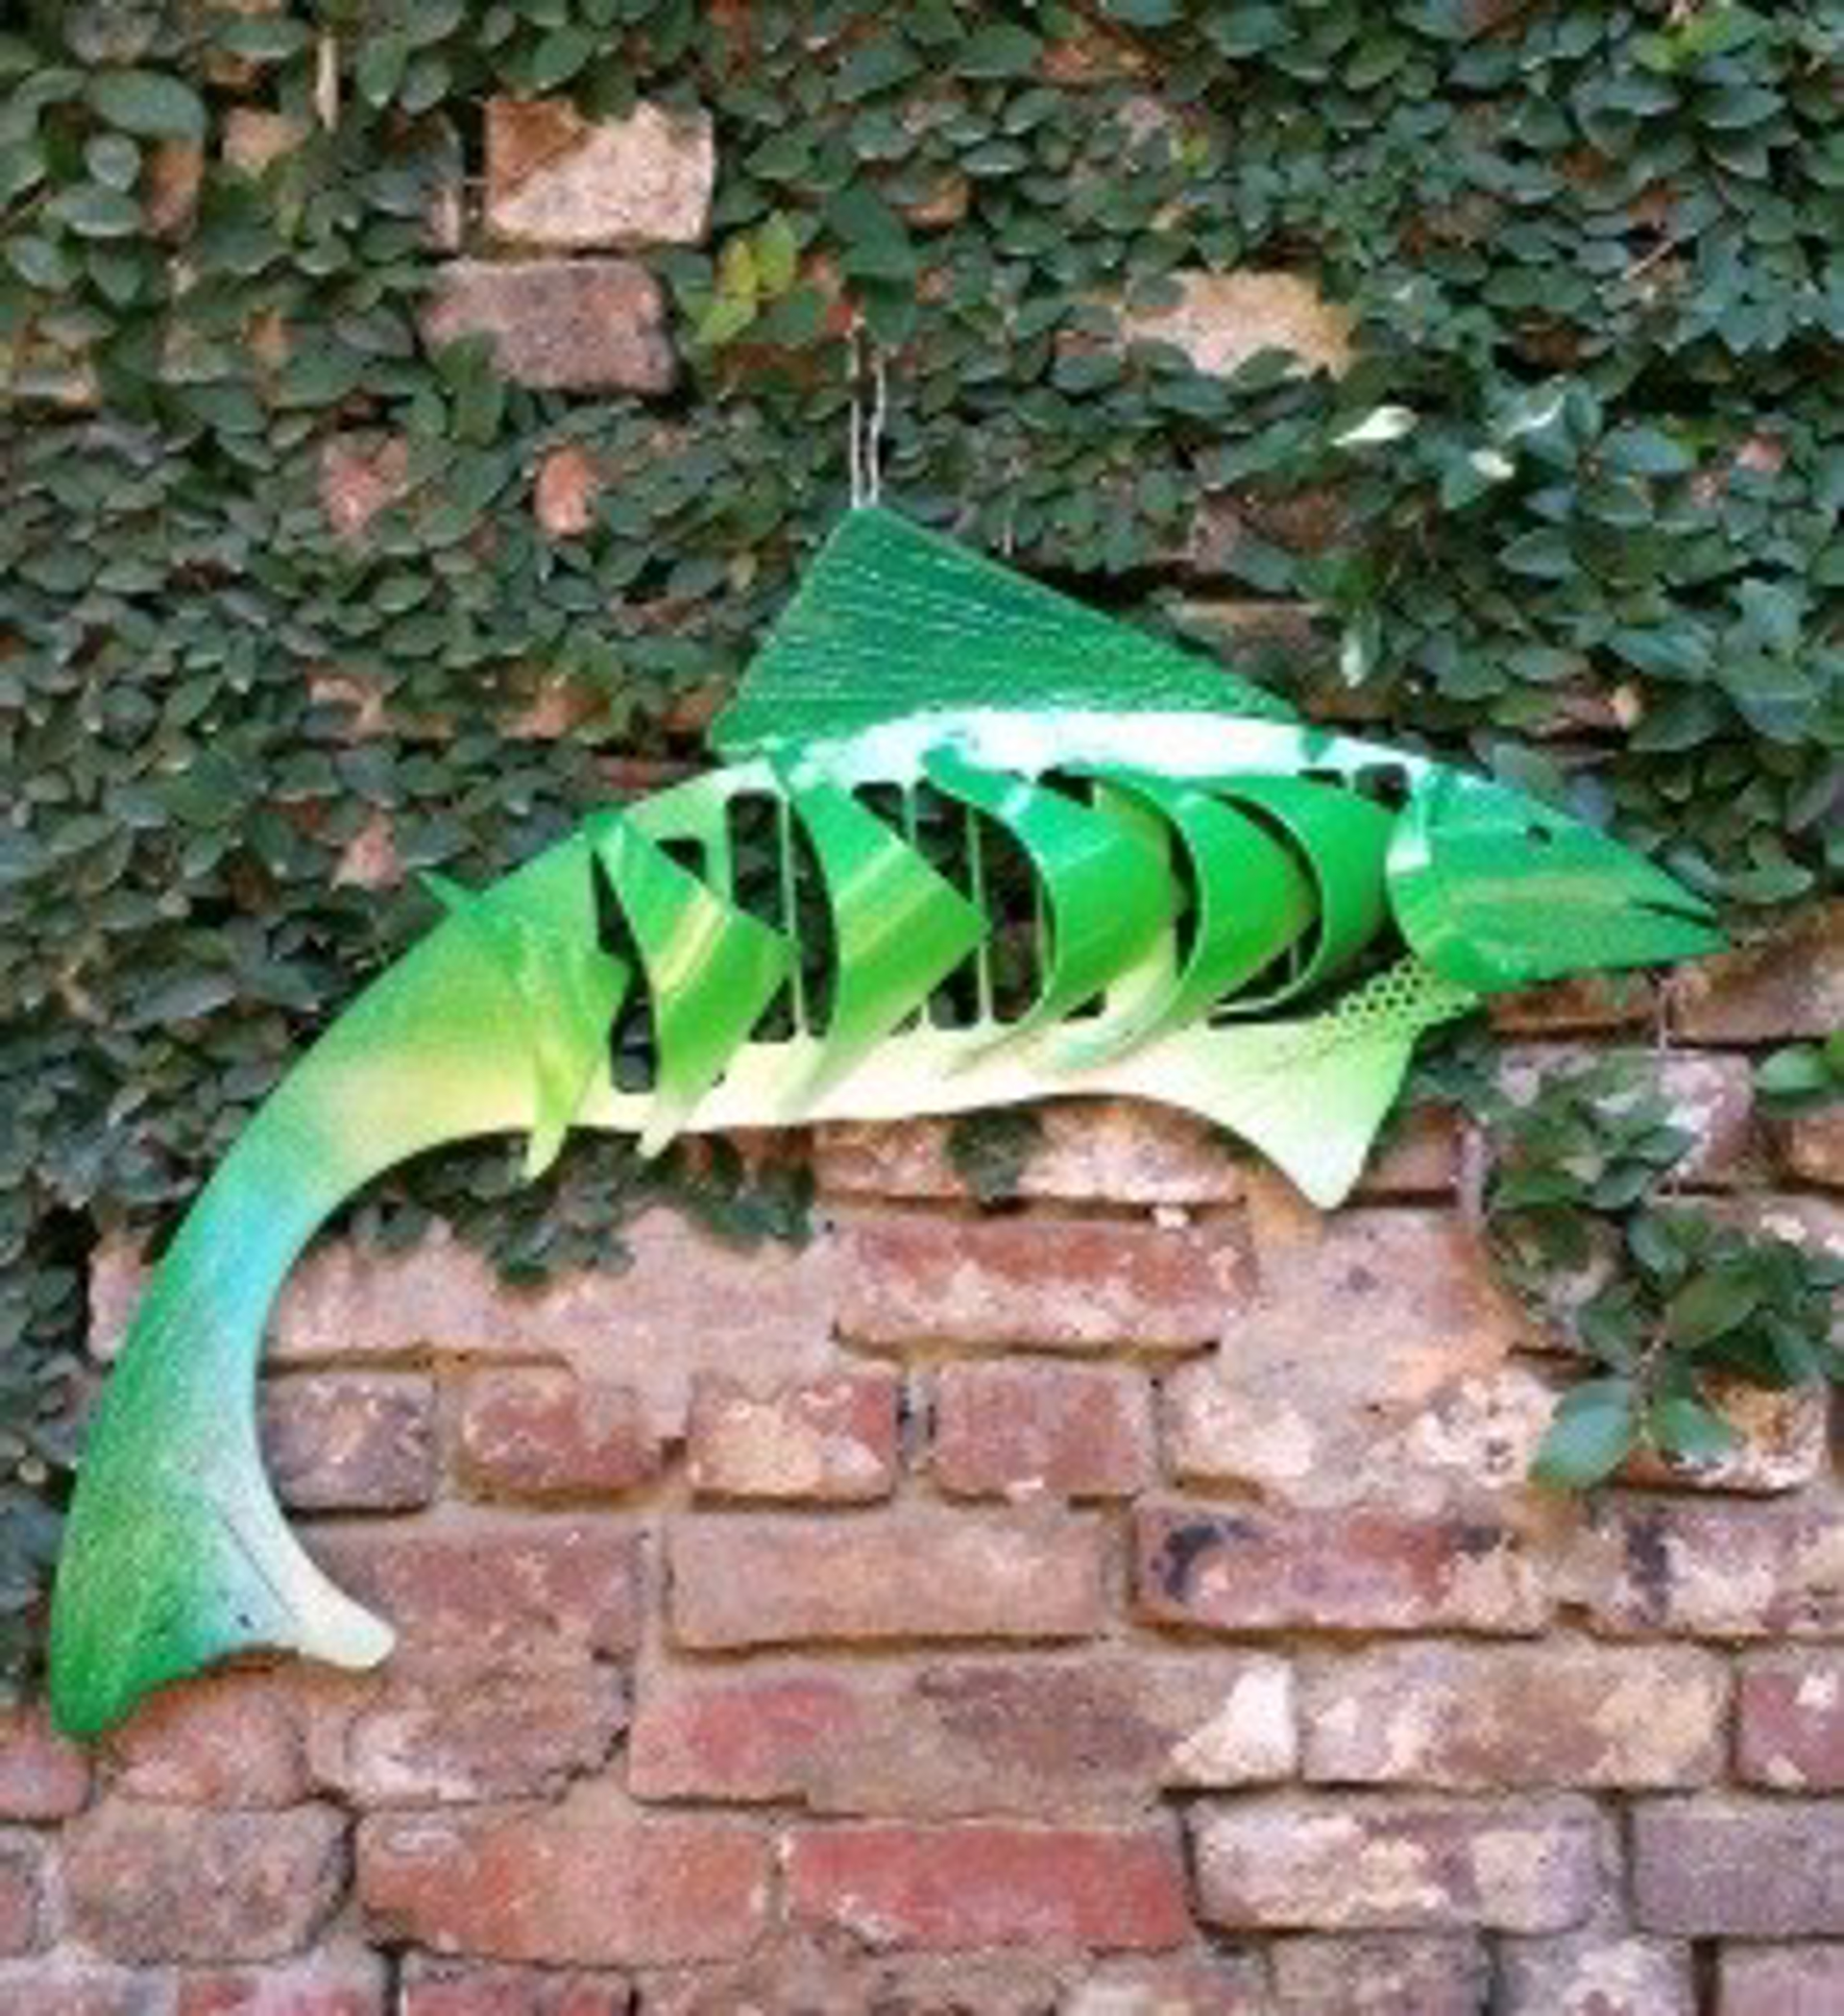 Green Fish by Stephen Kishel